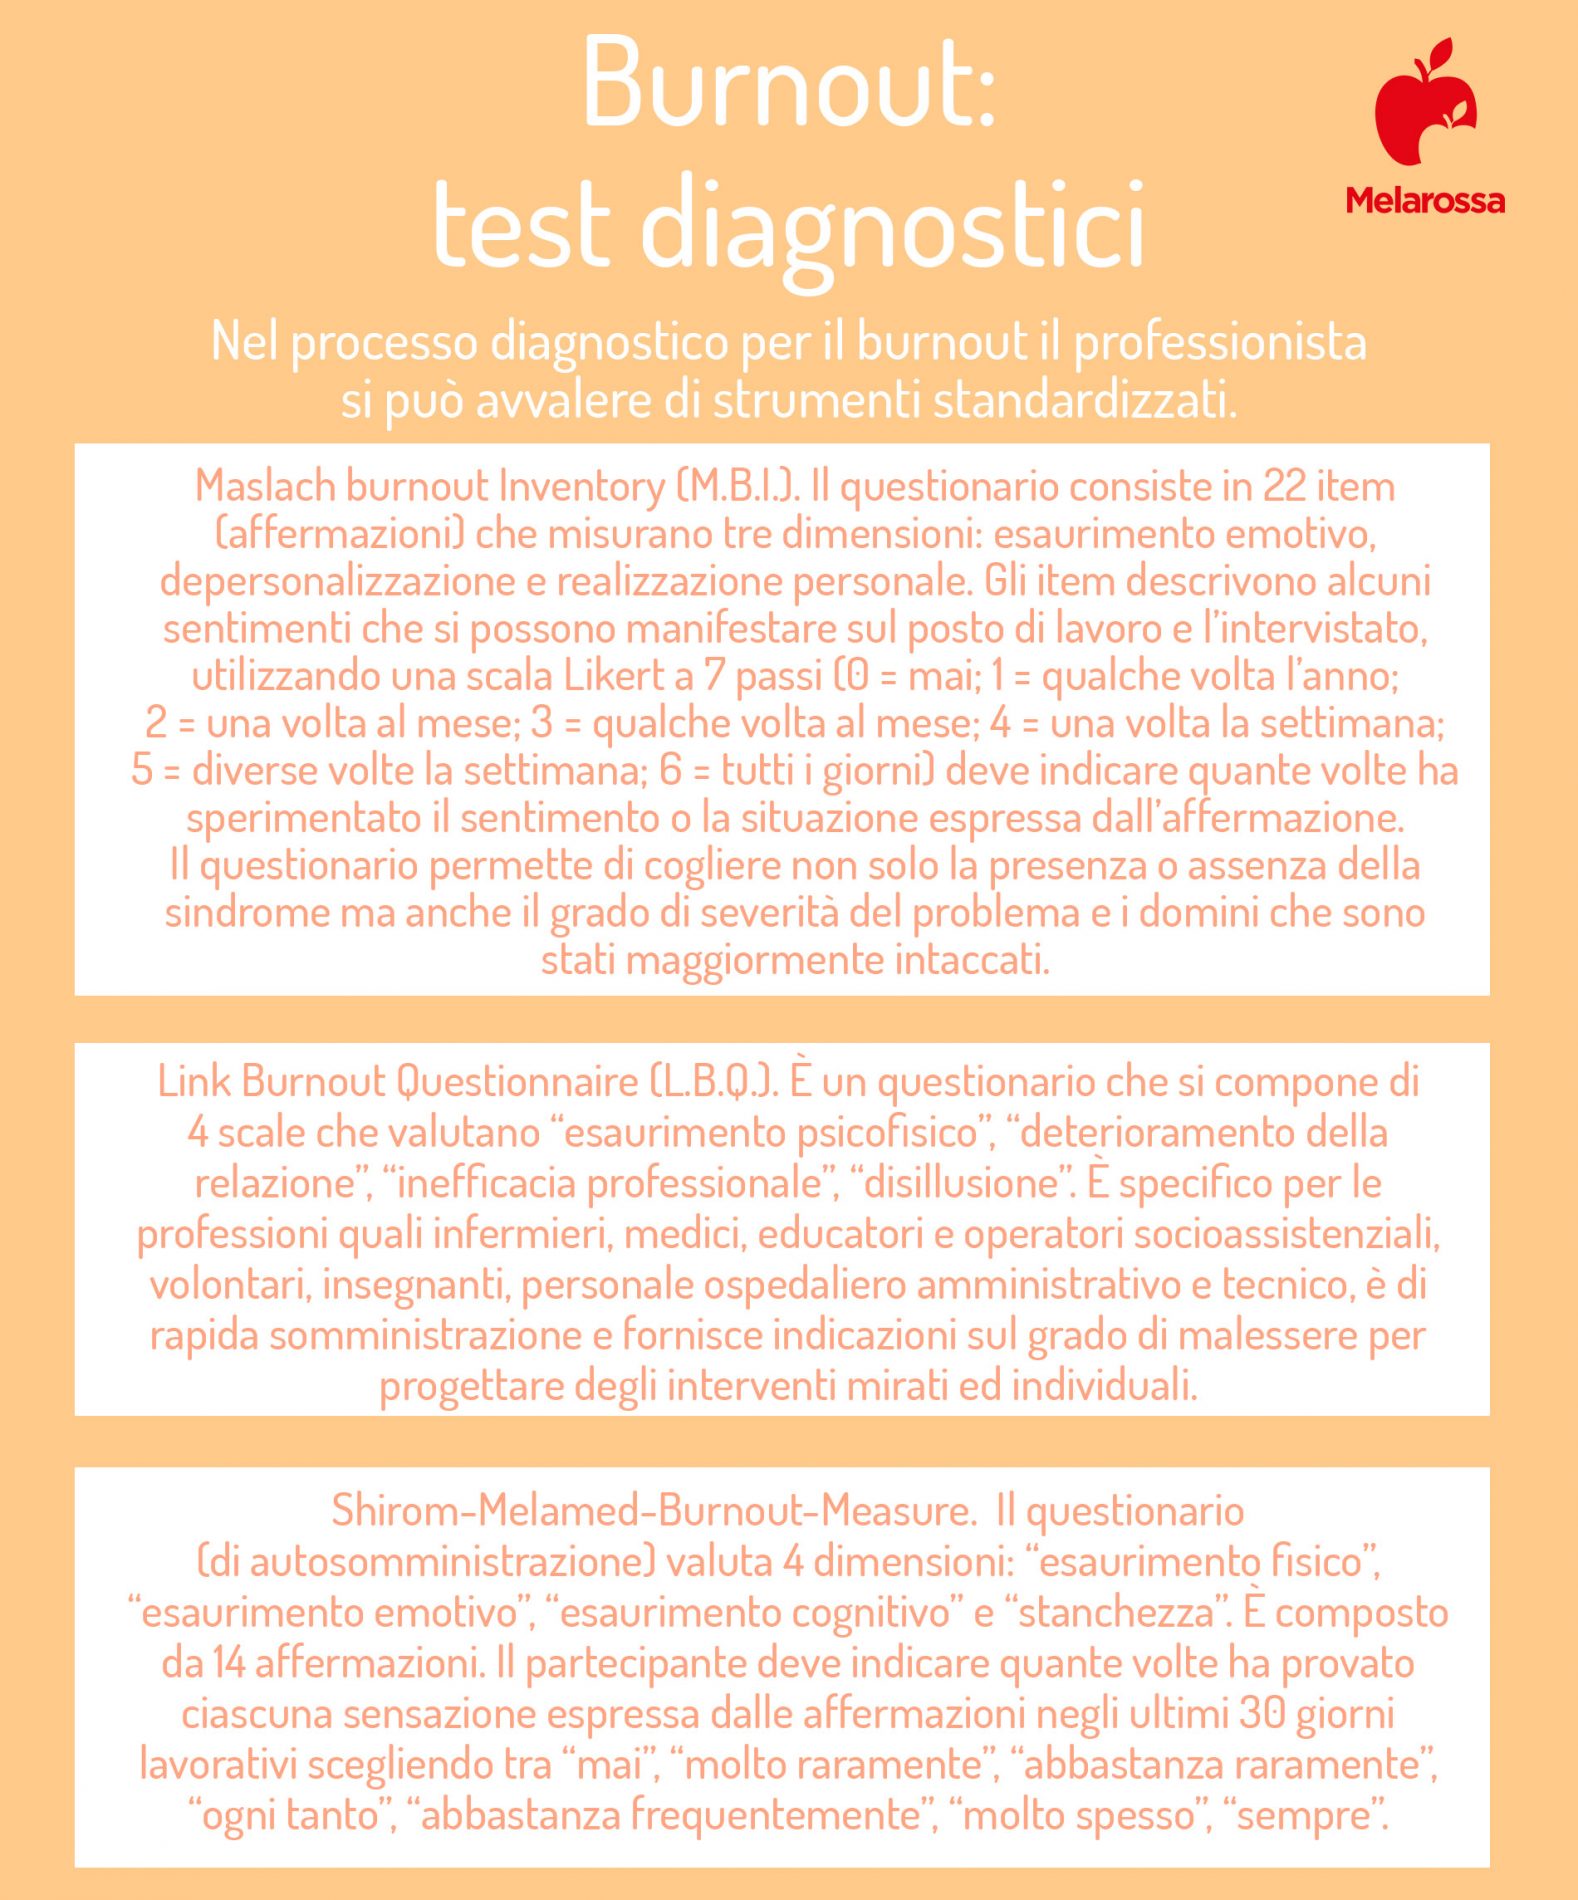 burnout: test diagnostici